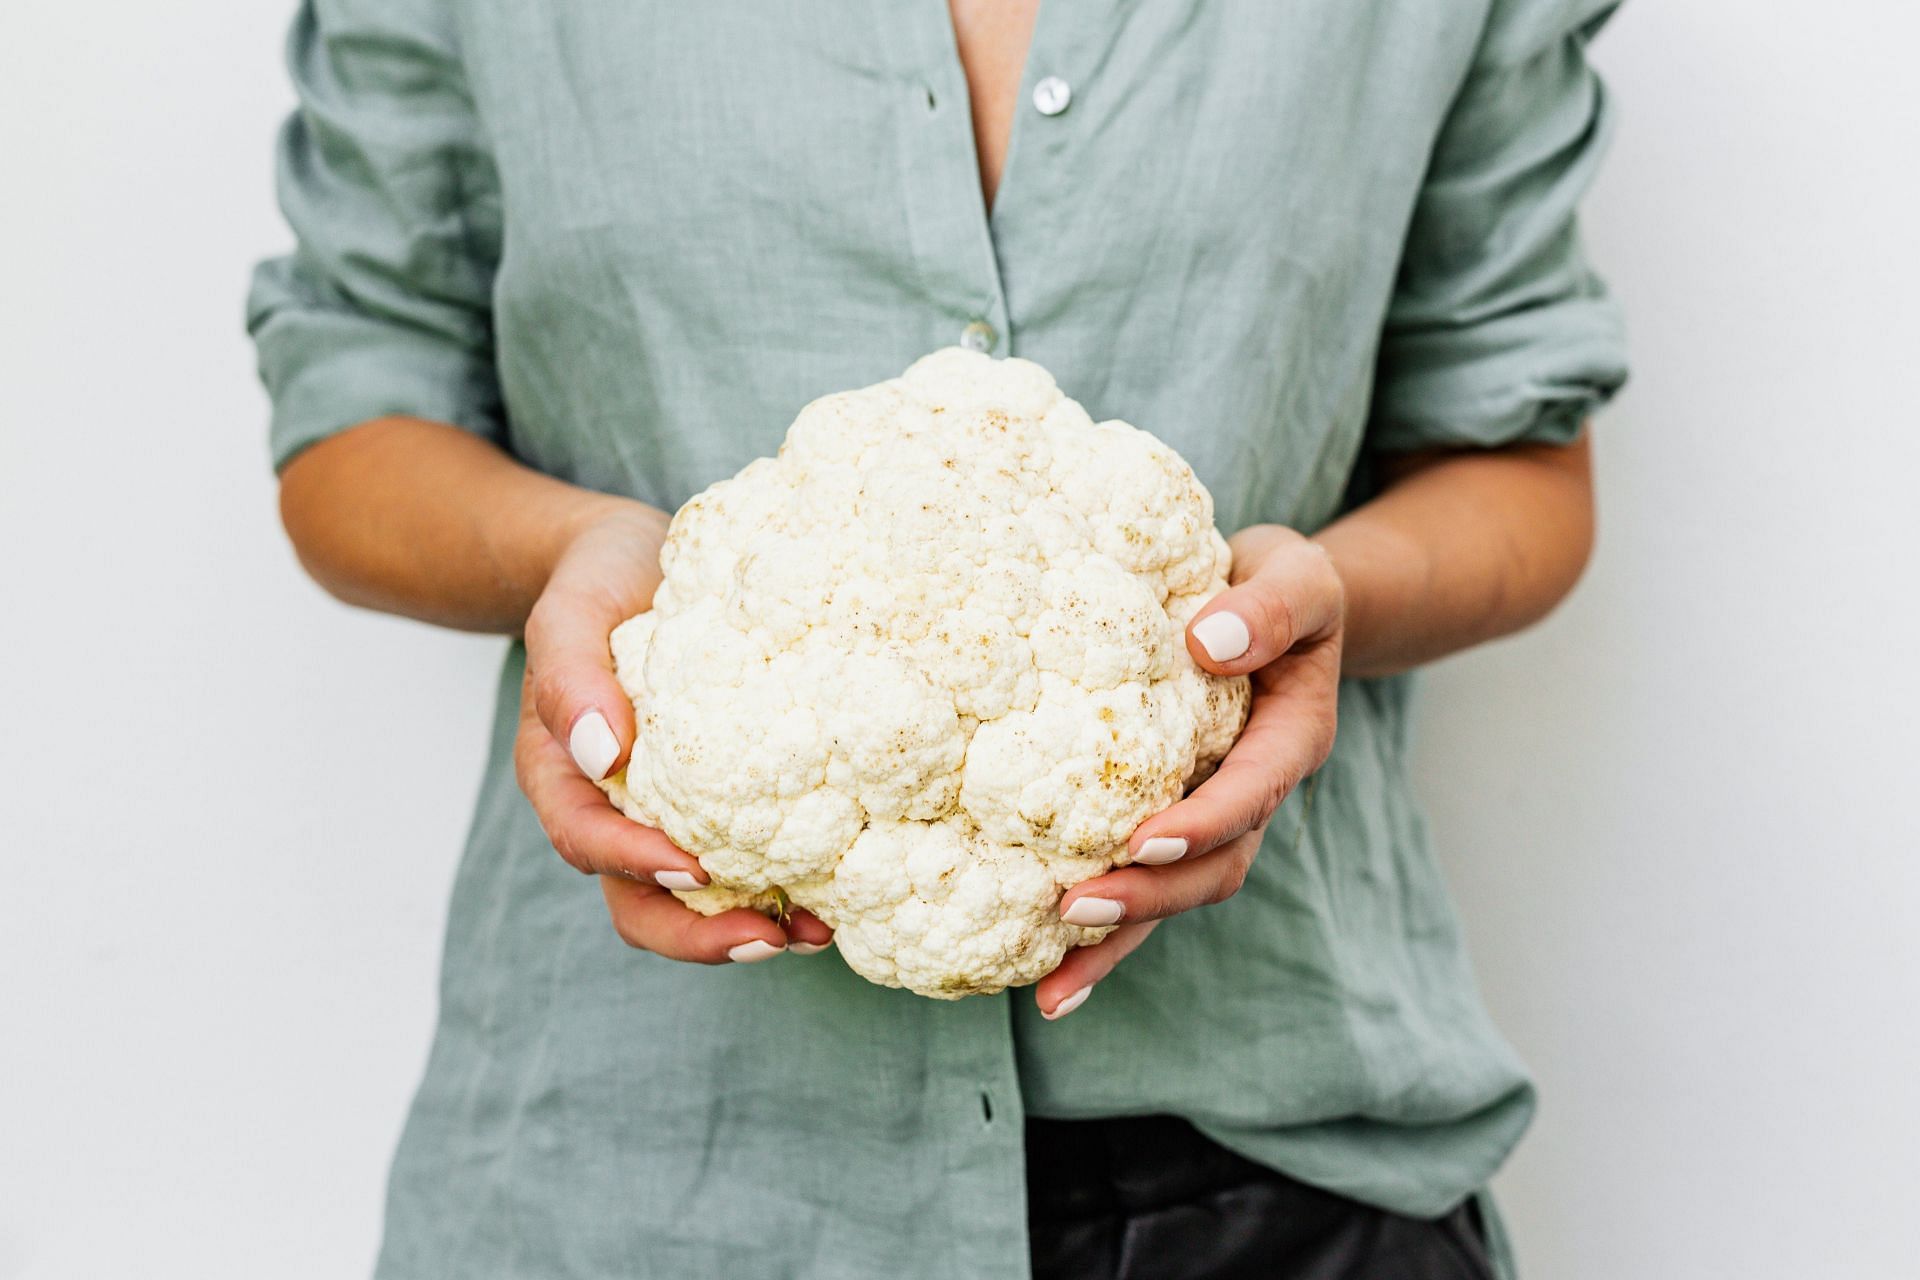 Cauliflower benefits (image sourced via Pexels / Photo by Karolina)